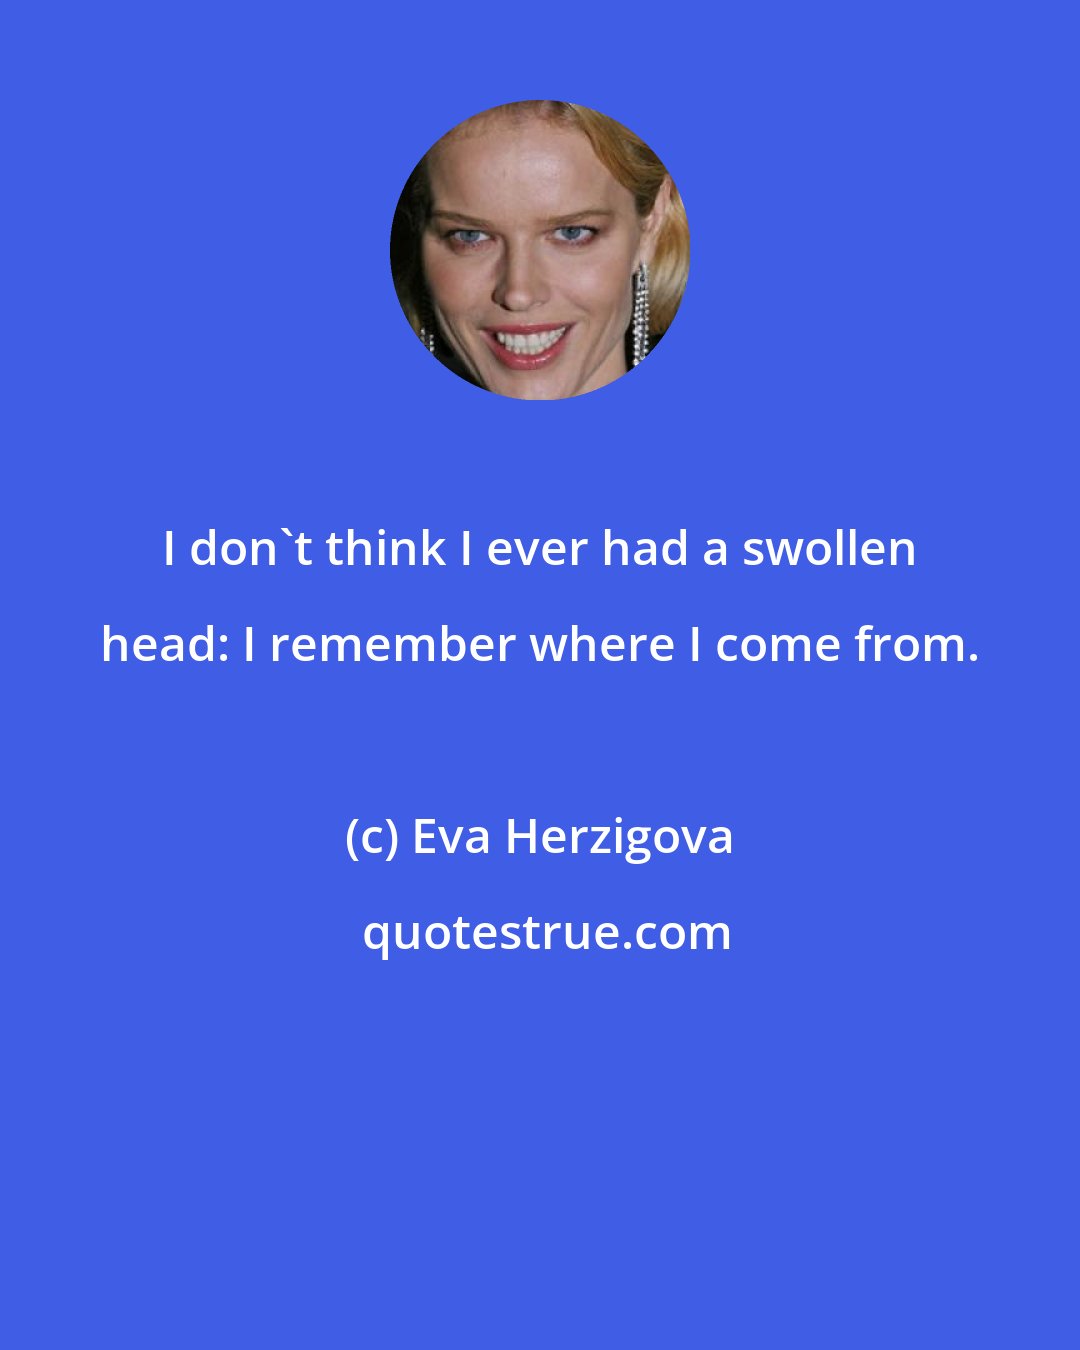 Eva Herzigova: I don't think I ever had a swollen head: I remember where I come from.